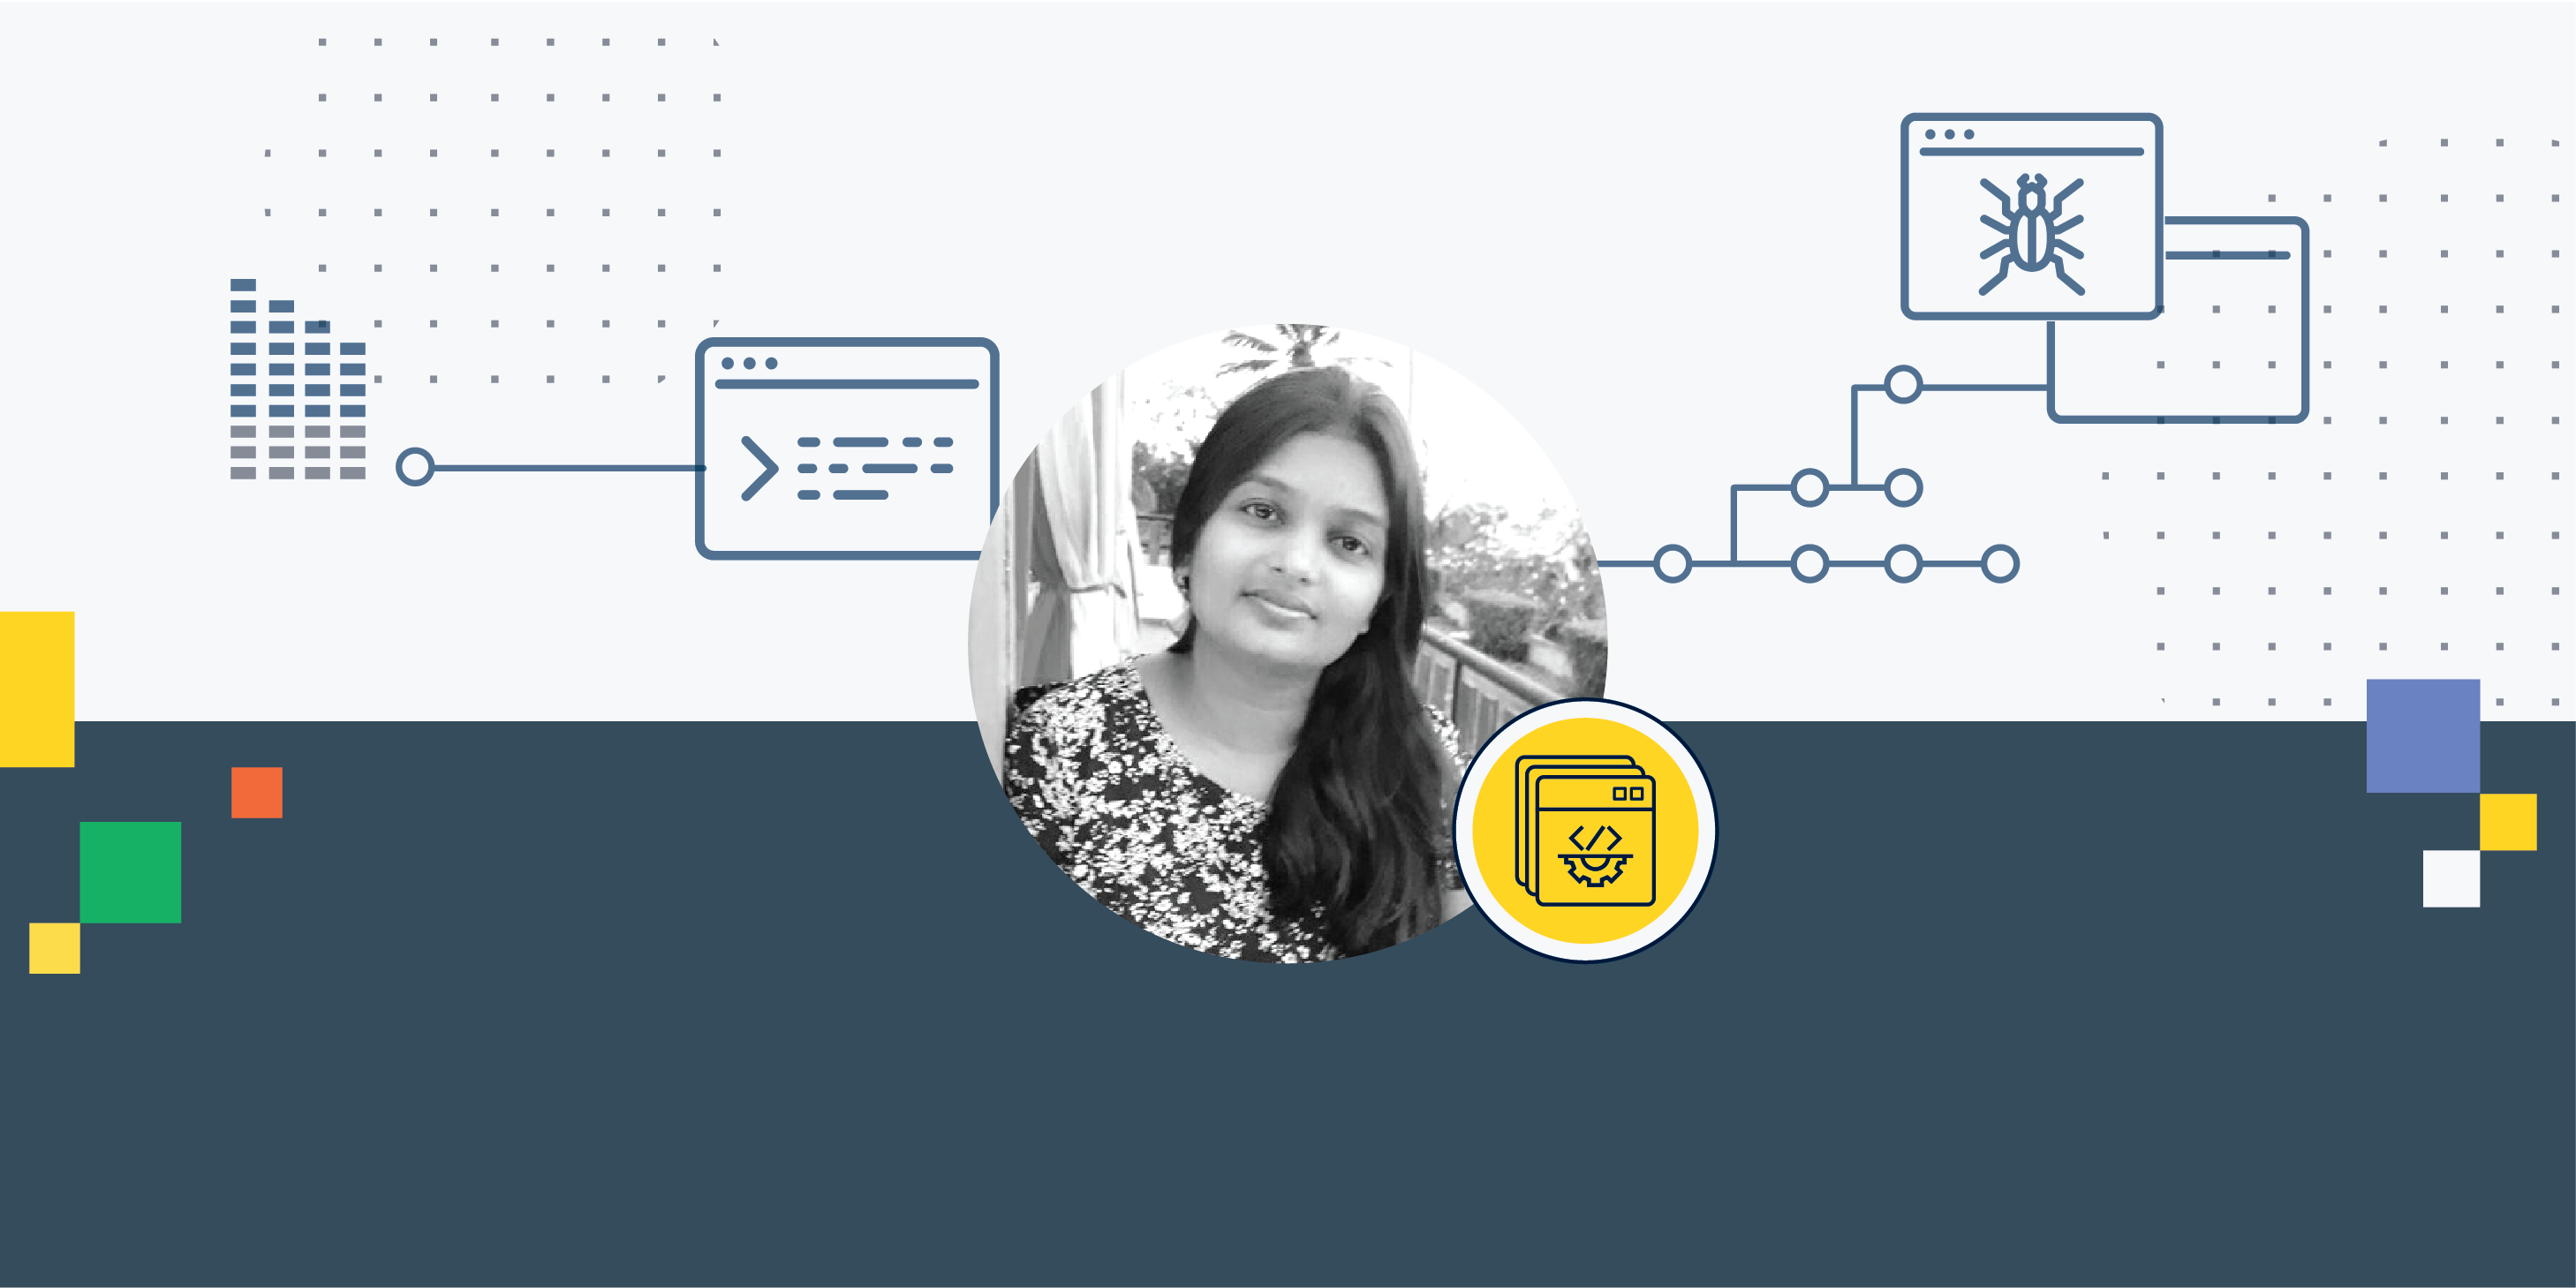 Meet Ishanka Samaraweera, Senior Software Engineer & Product Delivery Manager